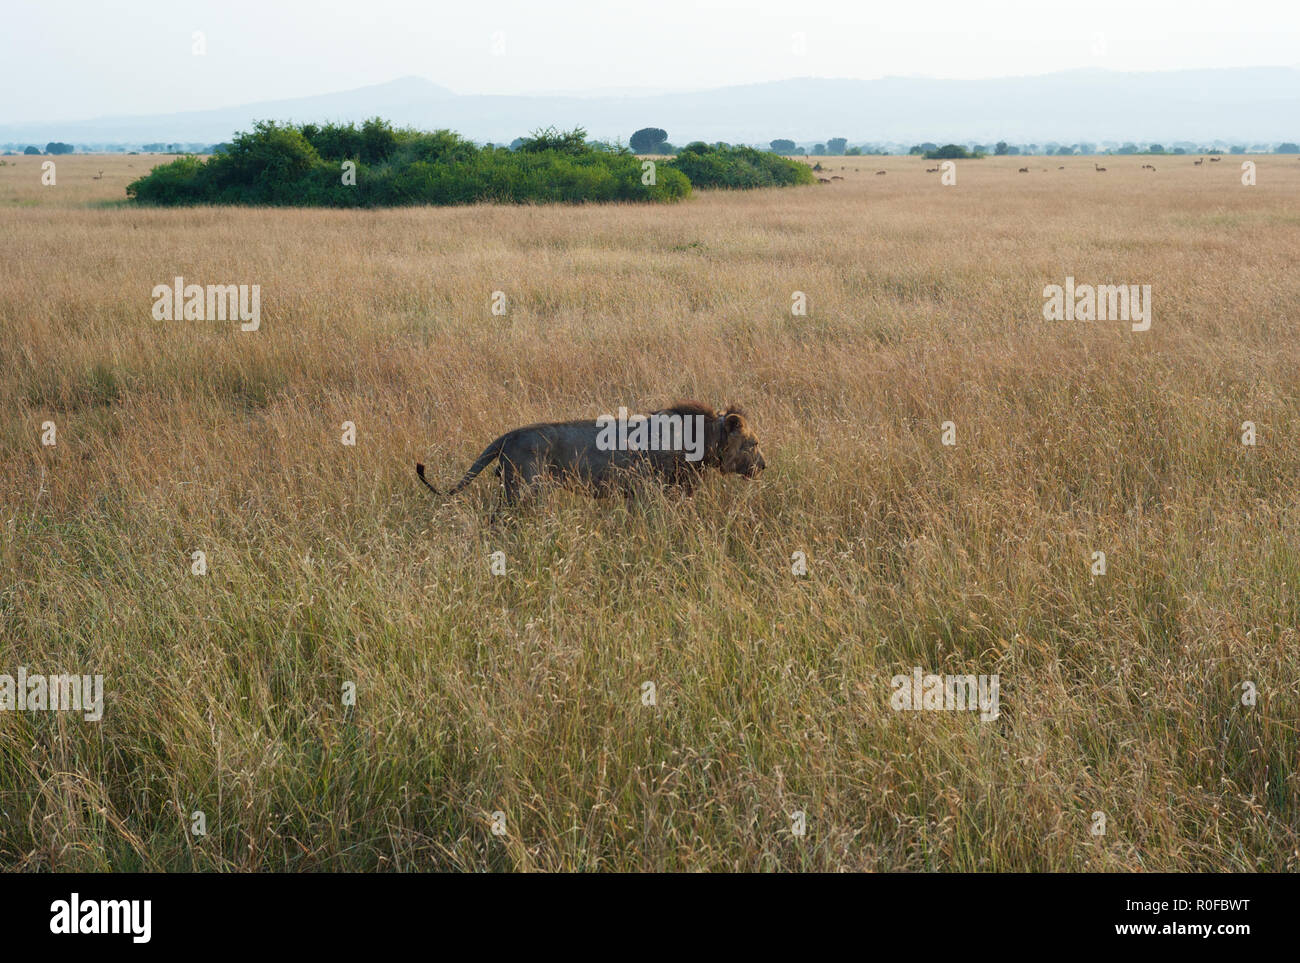 A Male Lion Stalking through High, Golden Grass in Uganda Stock Photo